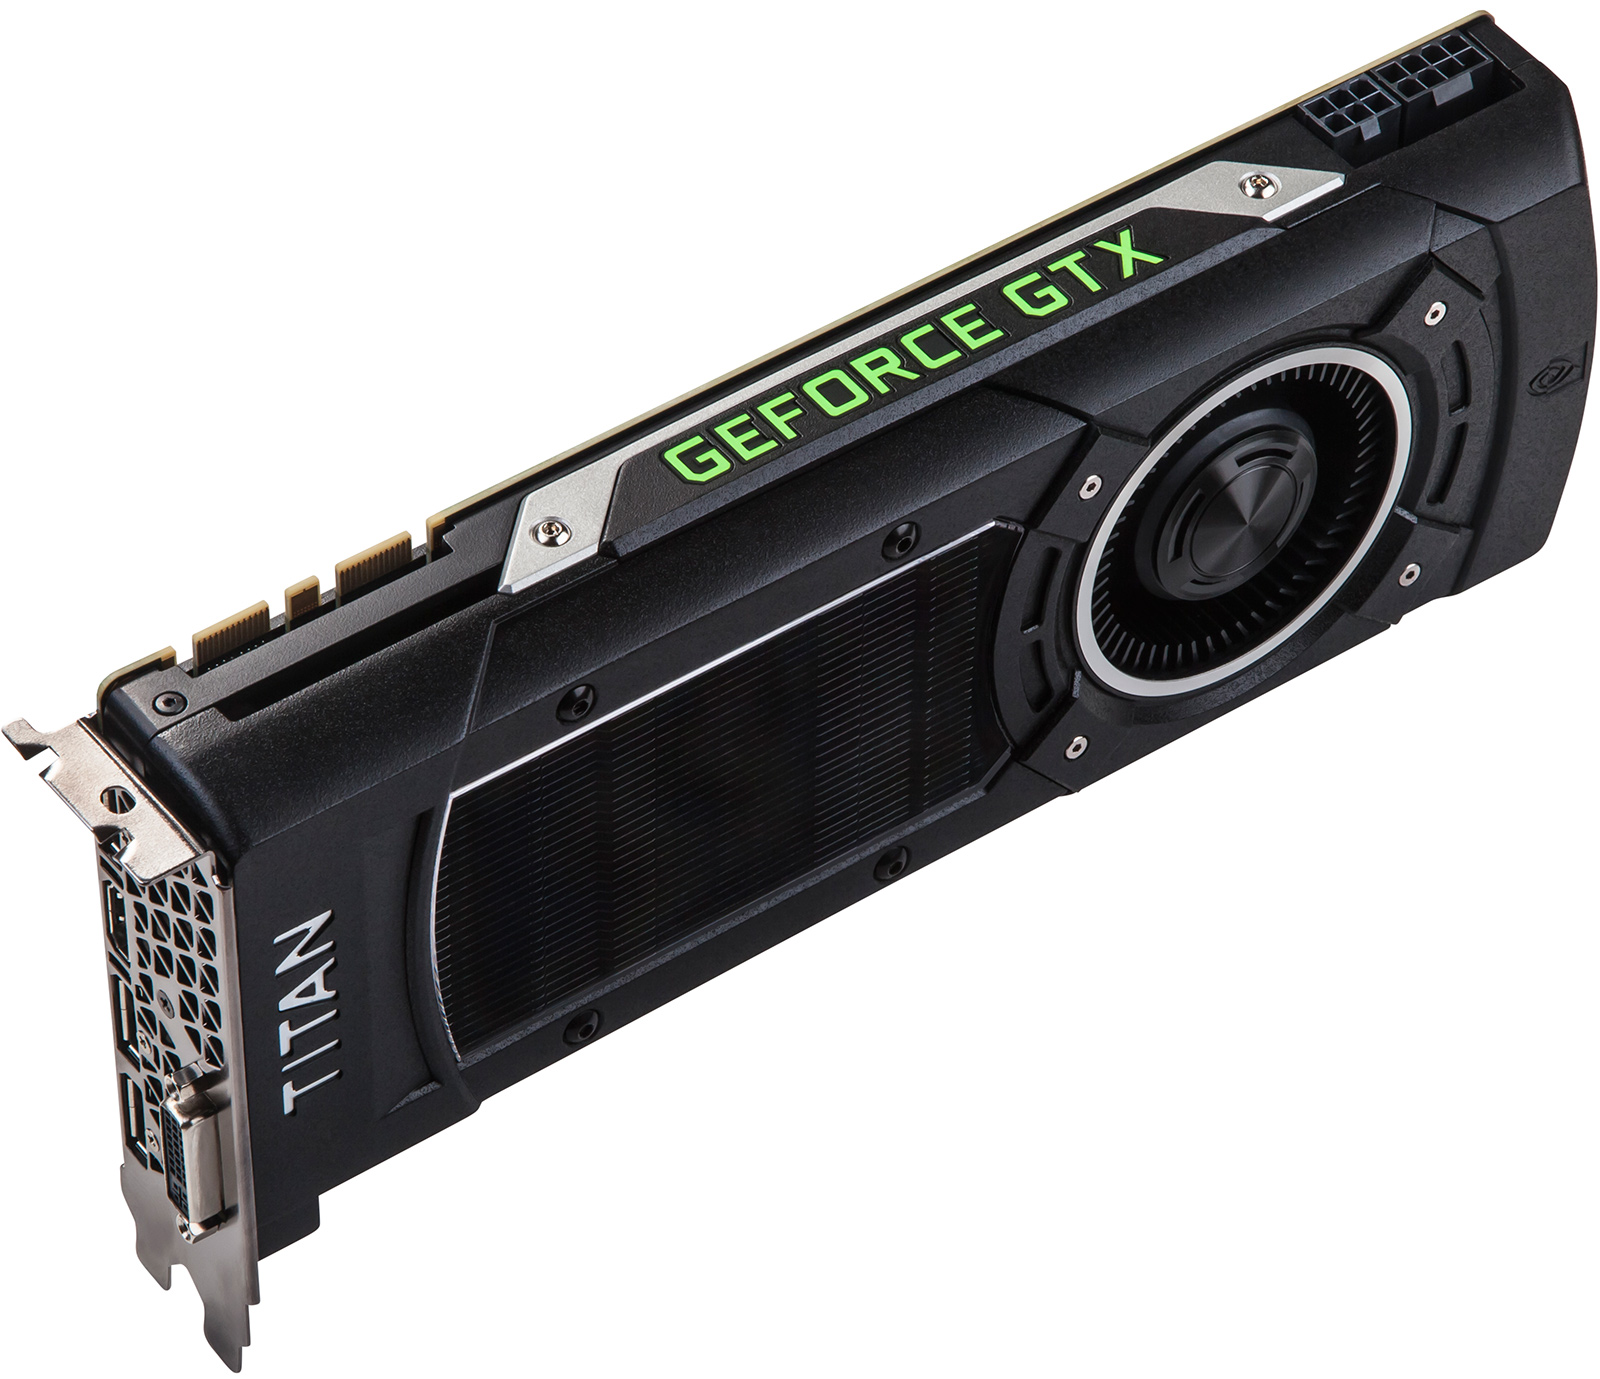 Nvidia: Sales of high-end GeForce GTX GPUs are increasing | KitGuru